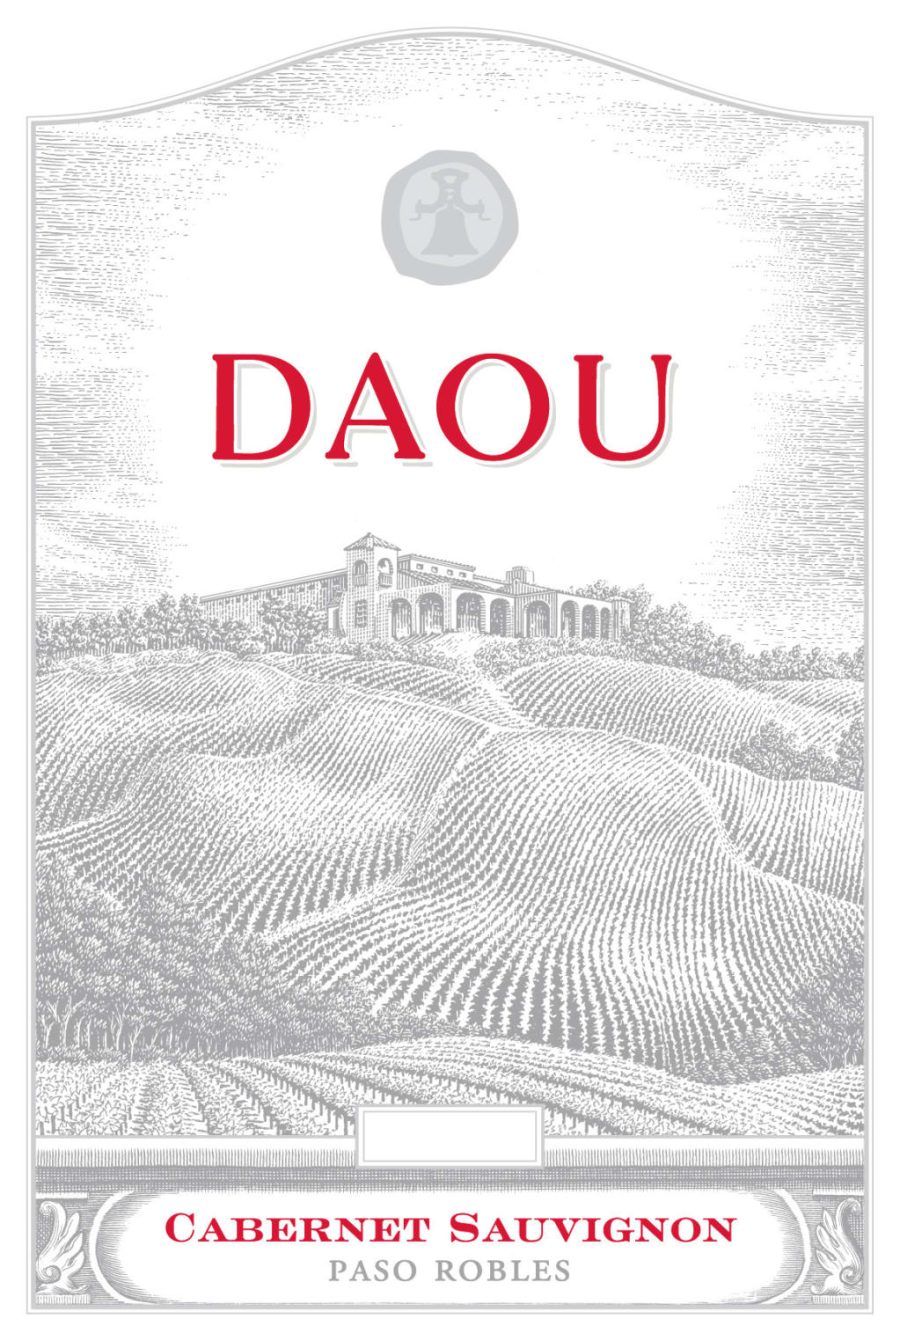 DAOU Wine | Reviews, Shop, History